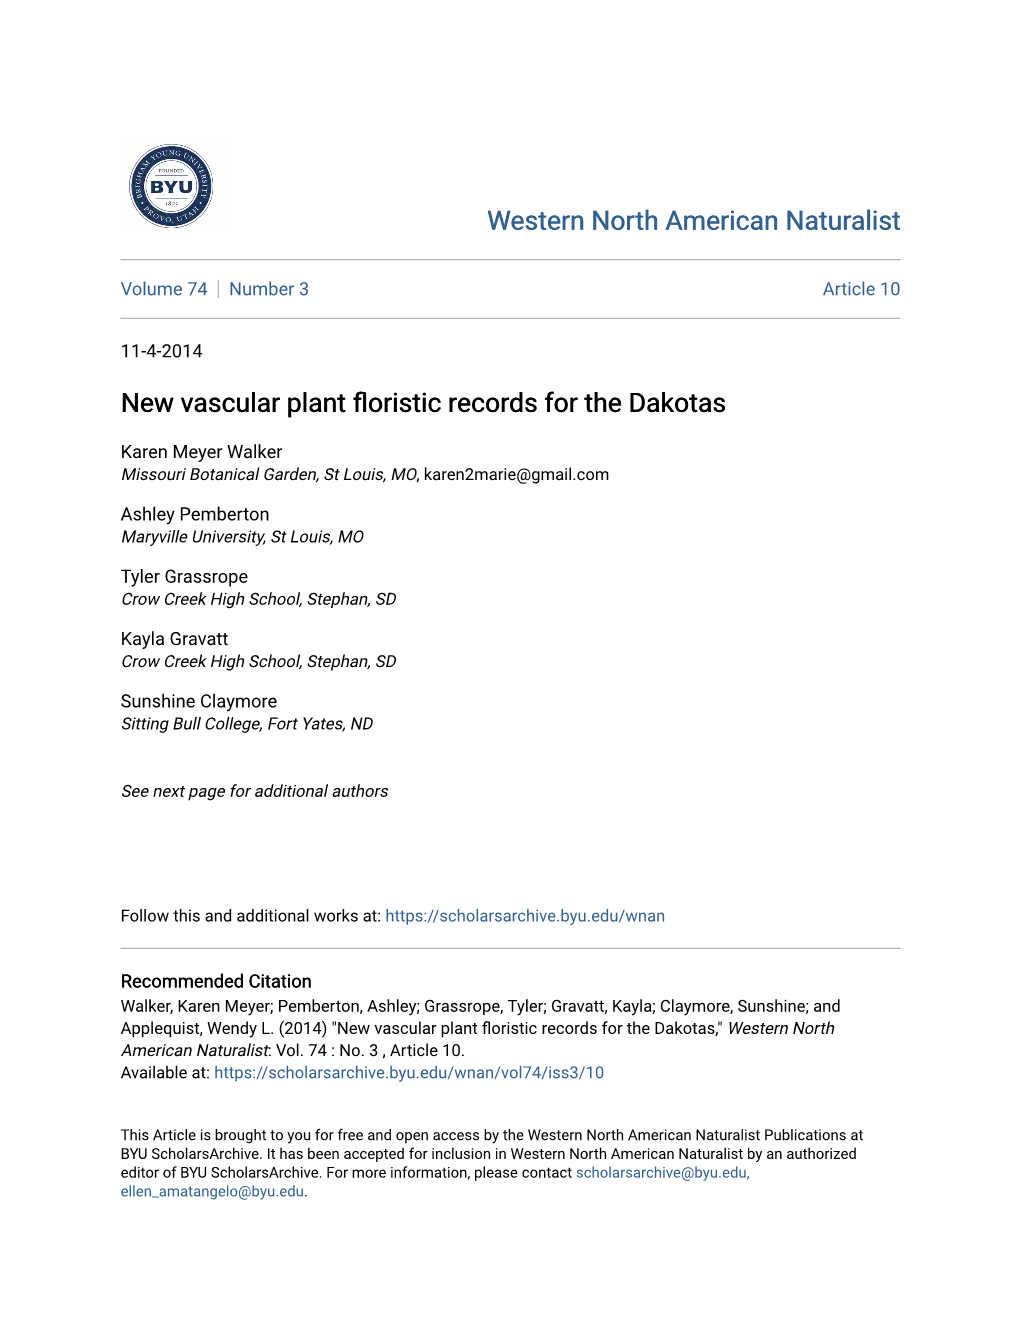 New Vascular Plant Floristic Records for the Dakotas